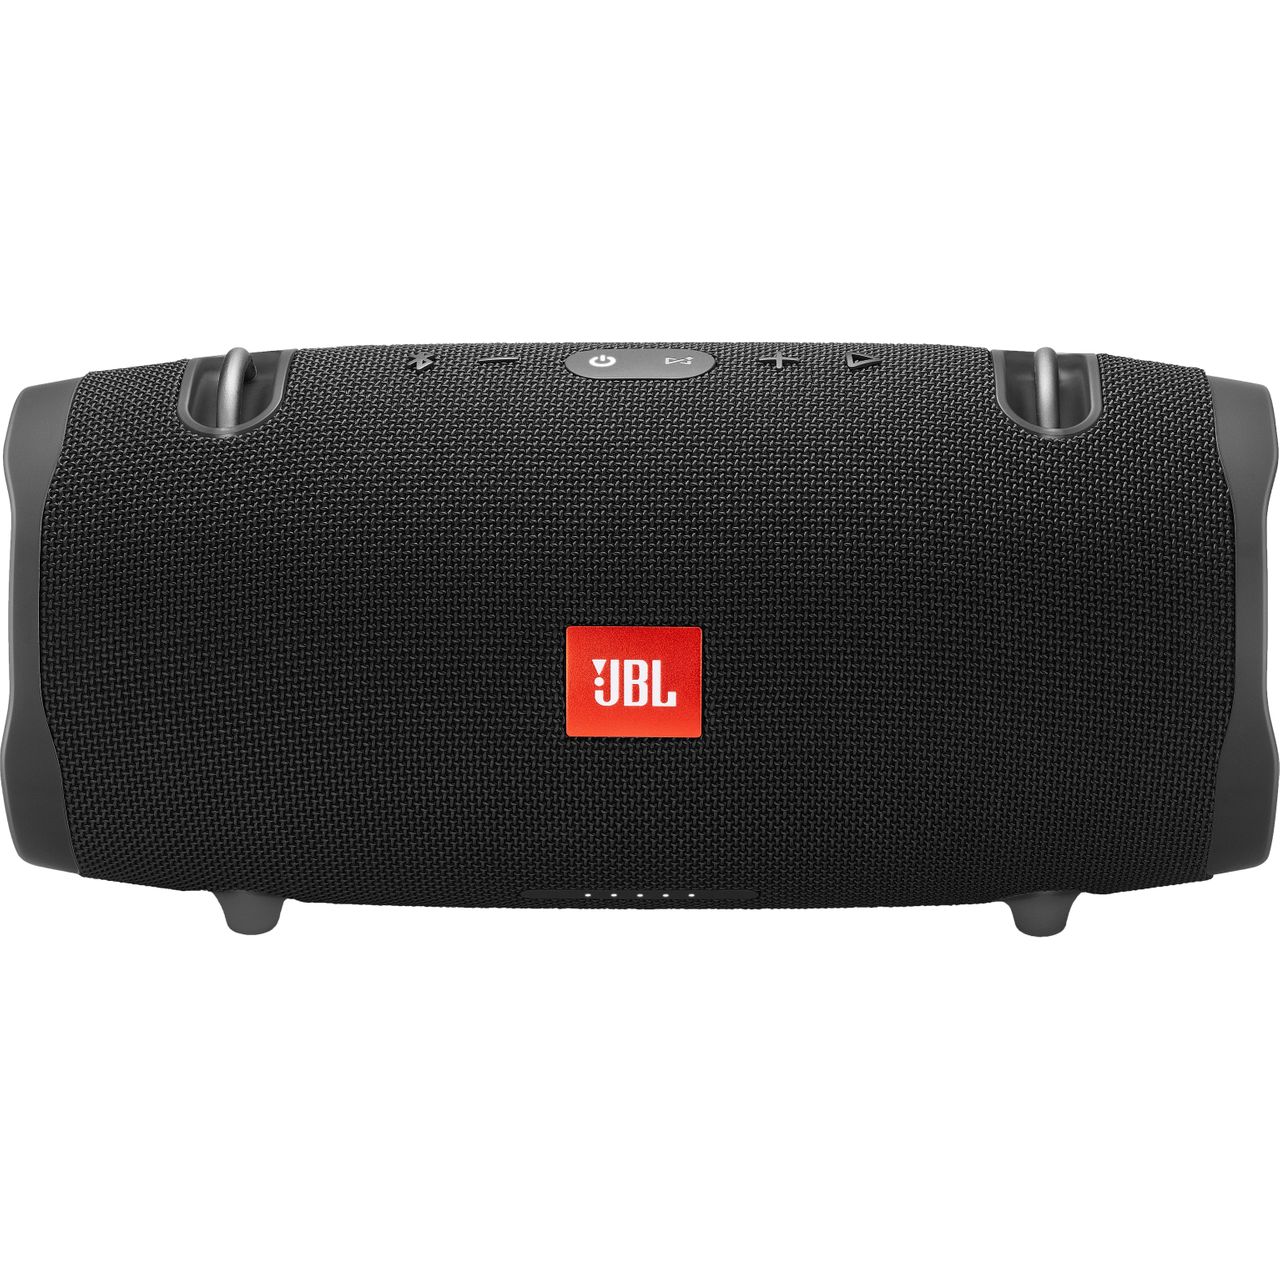 JBL Xtreme 2 Wireless Speaker Review